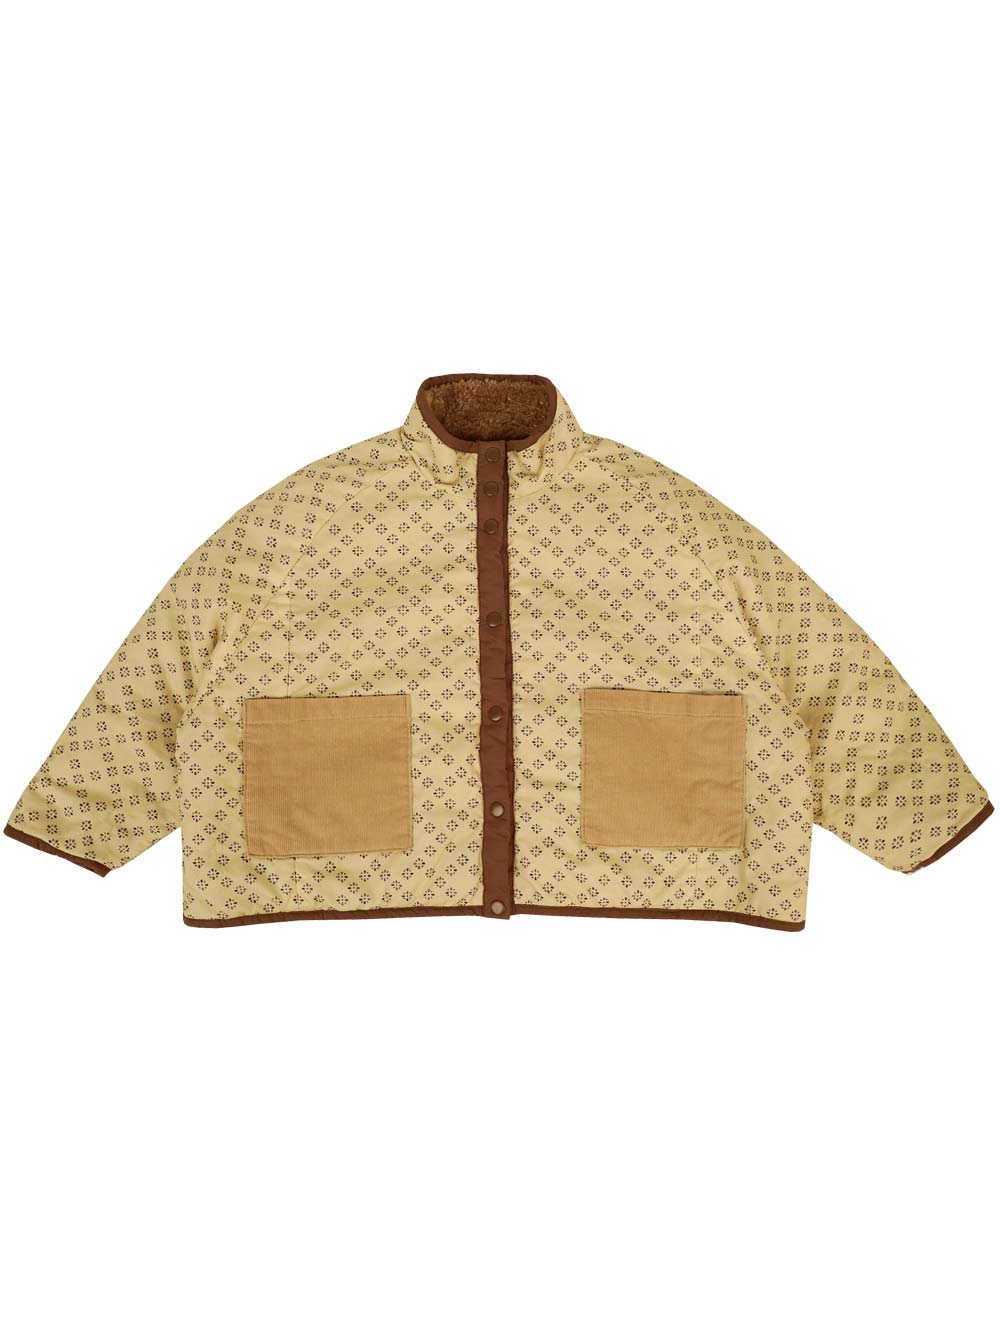 monogram quilted jacket